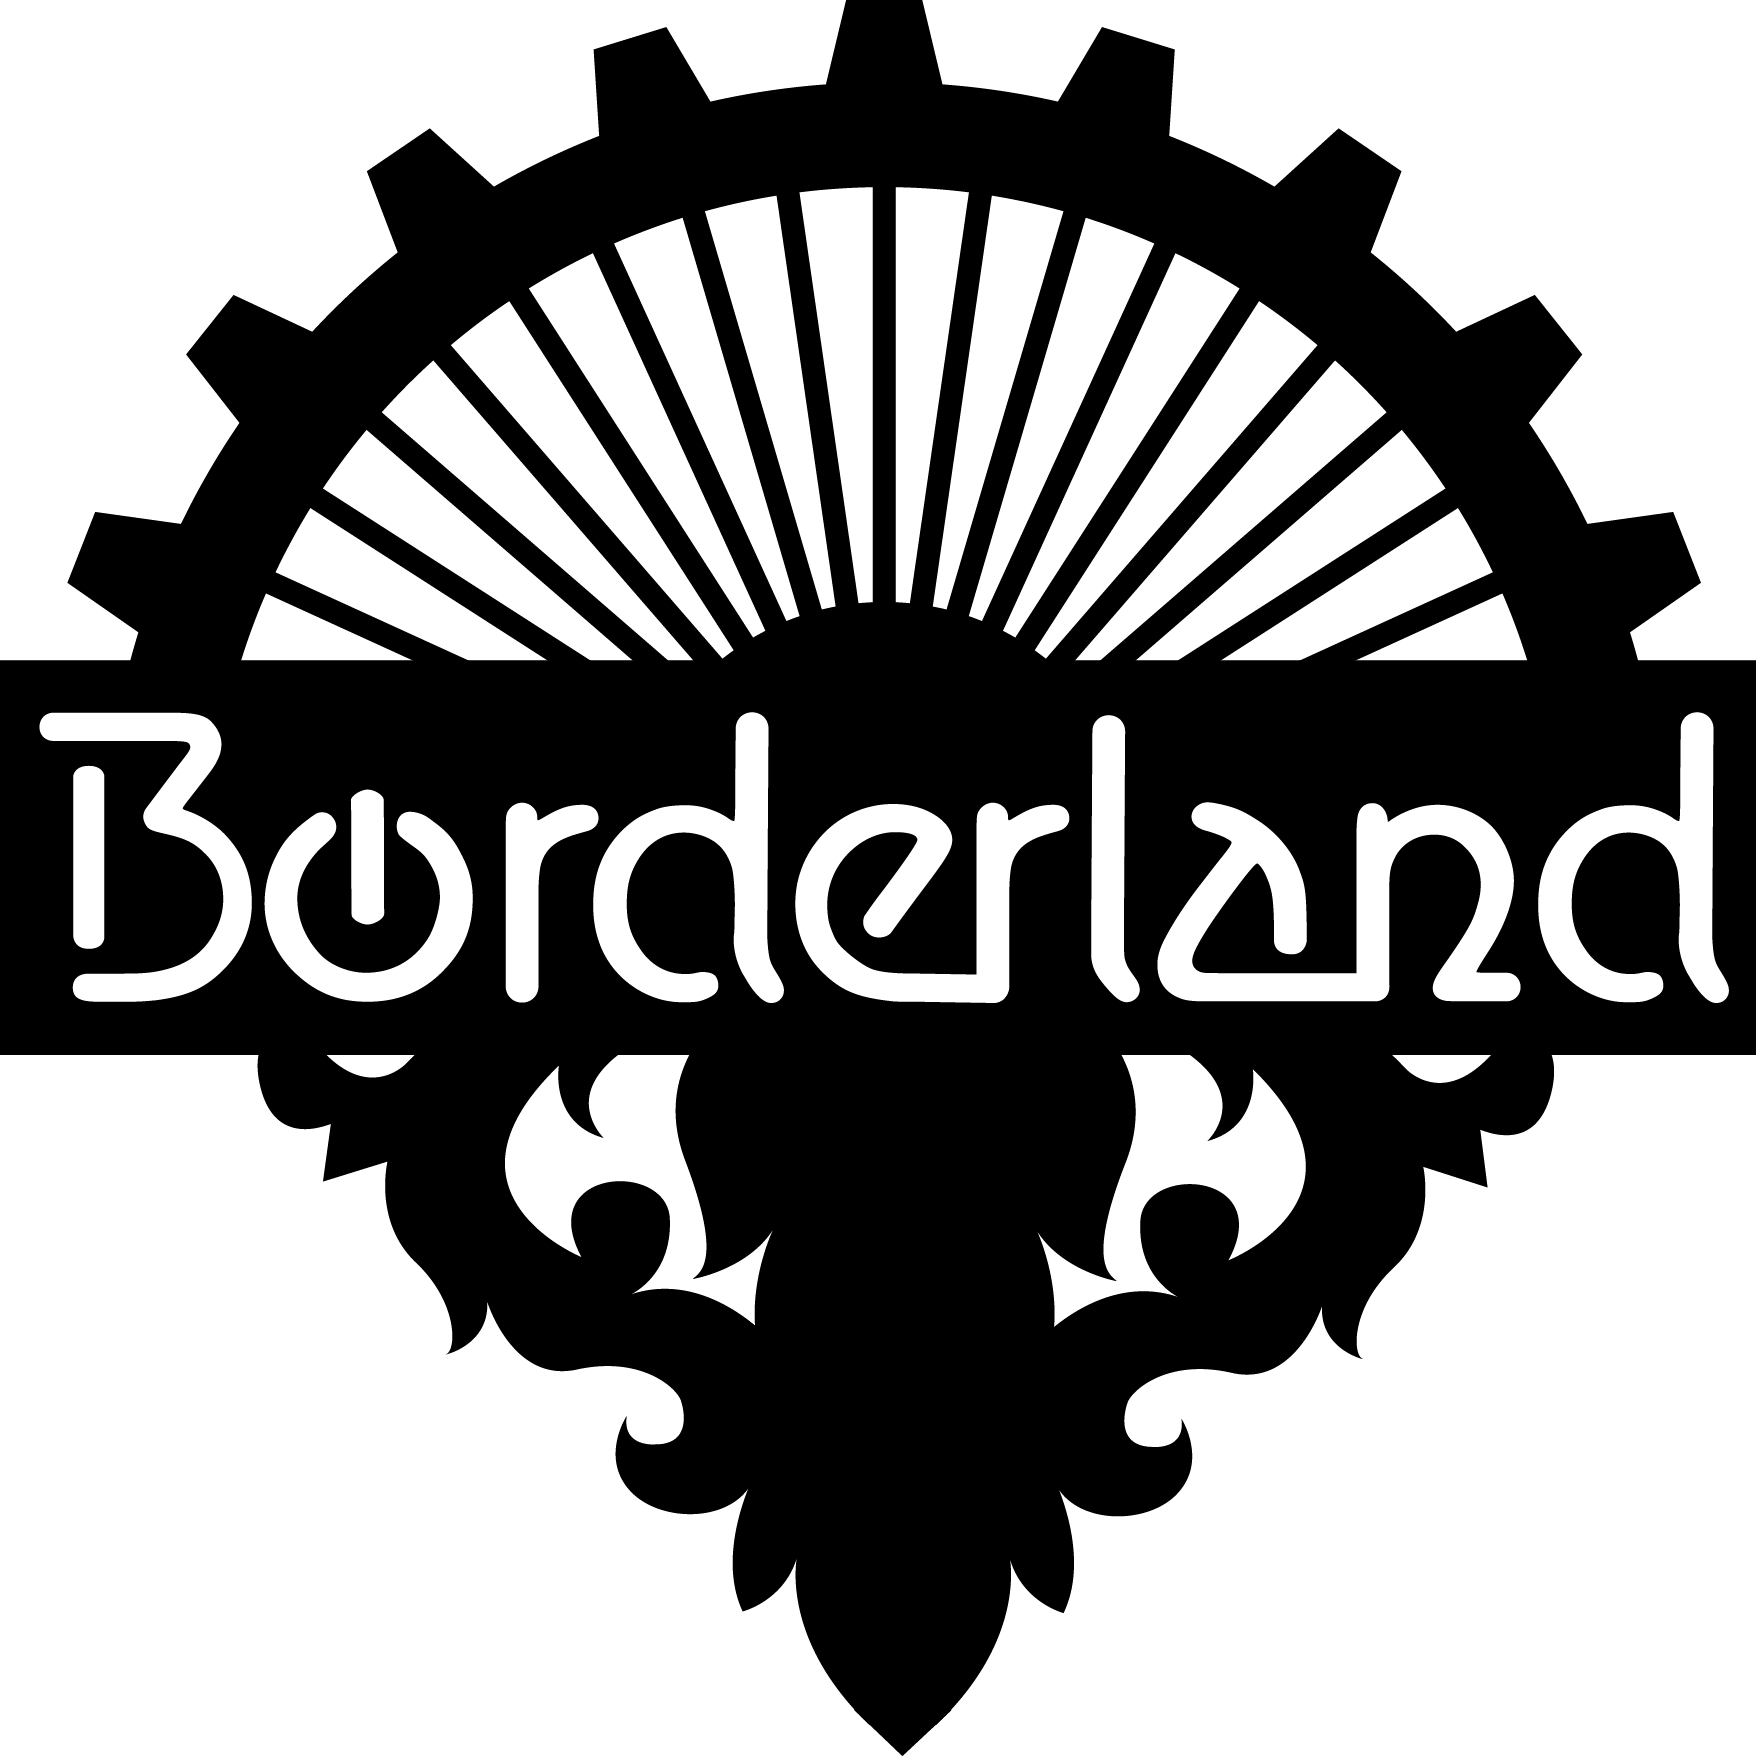 Photobooth Borderland Portugal